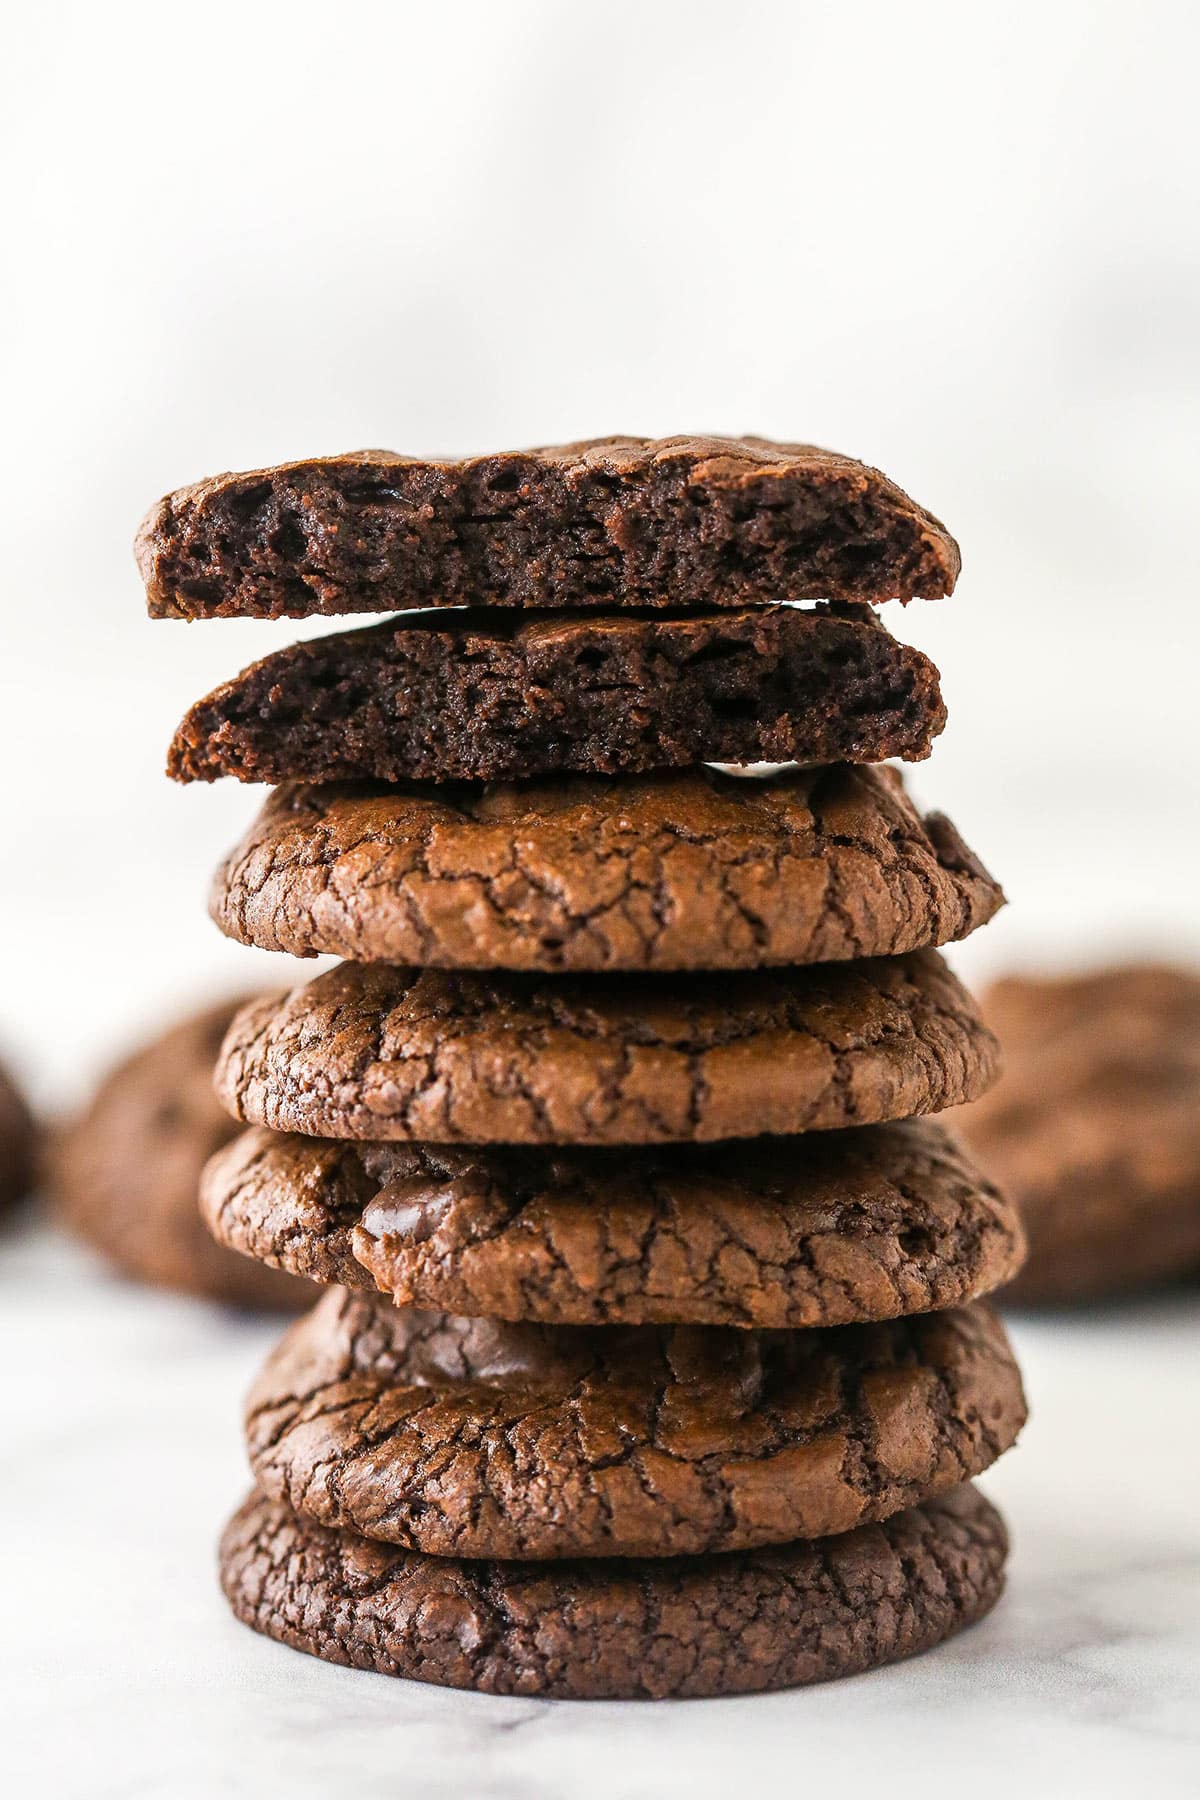 A stack of brownie cookies. The top one is broken in half.